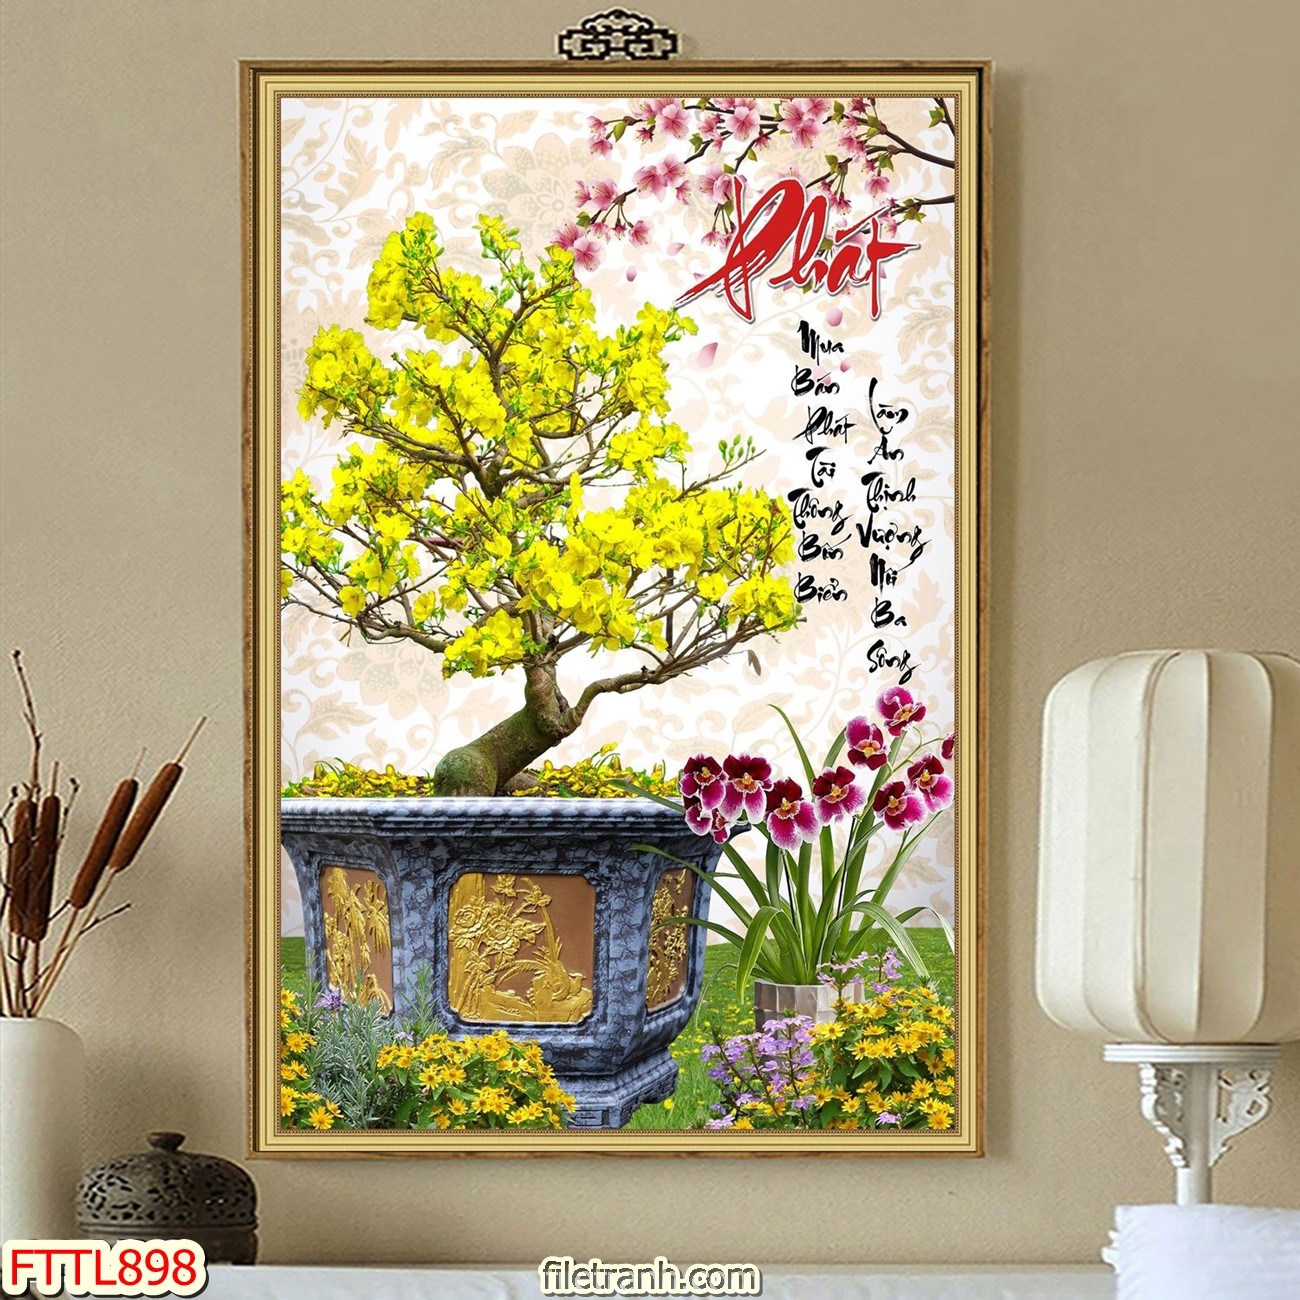 http://filetranh.com/file-tranh-chau-mai-bonsai/file-tranh-chau-mai-bonsai-fttl898.html